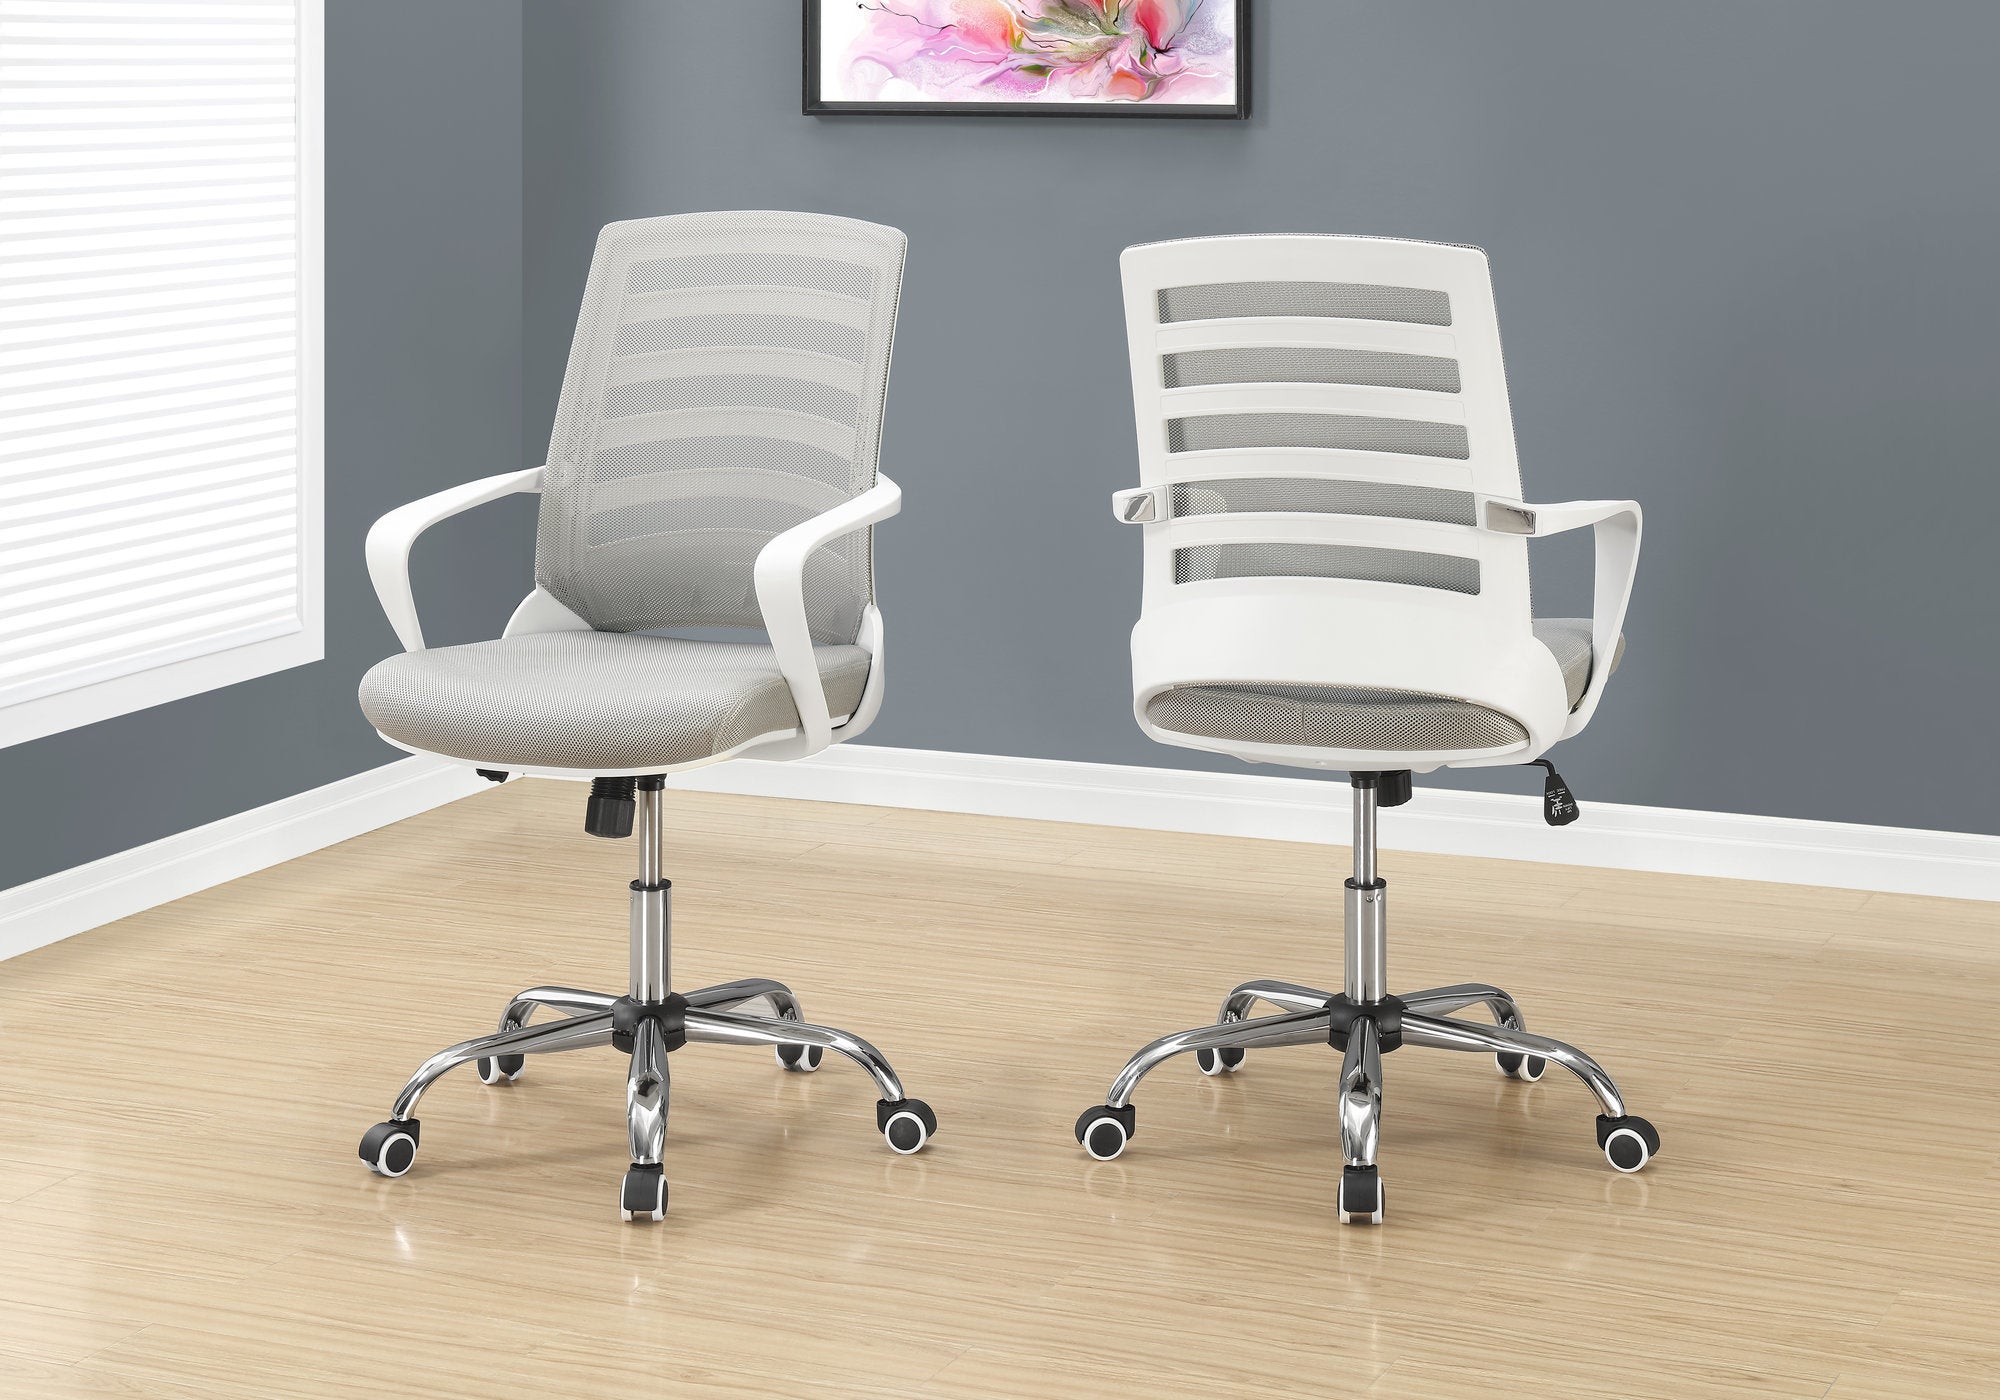 MN-557225    Office Chair, Adjustable Height, Swivel, Ergonomic, Armrests, Computer Desk, Office, Metal Base, Mesh, White, Grey, Chrome, Contemporary, Modern